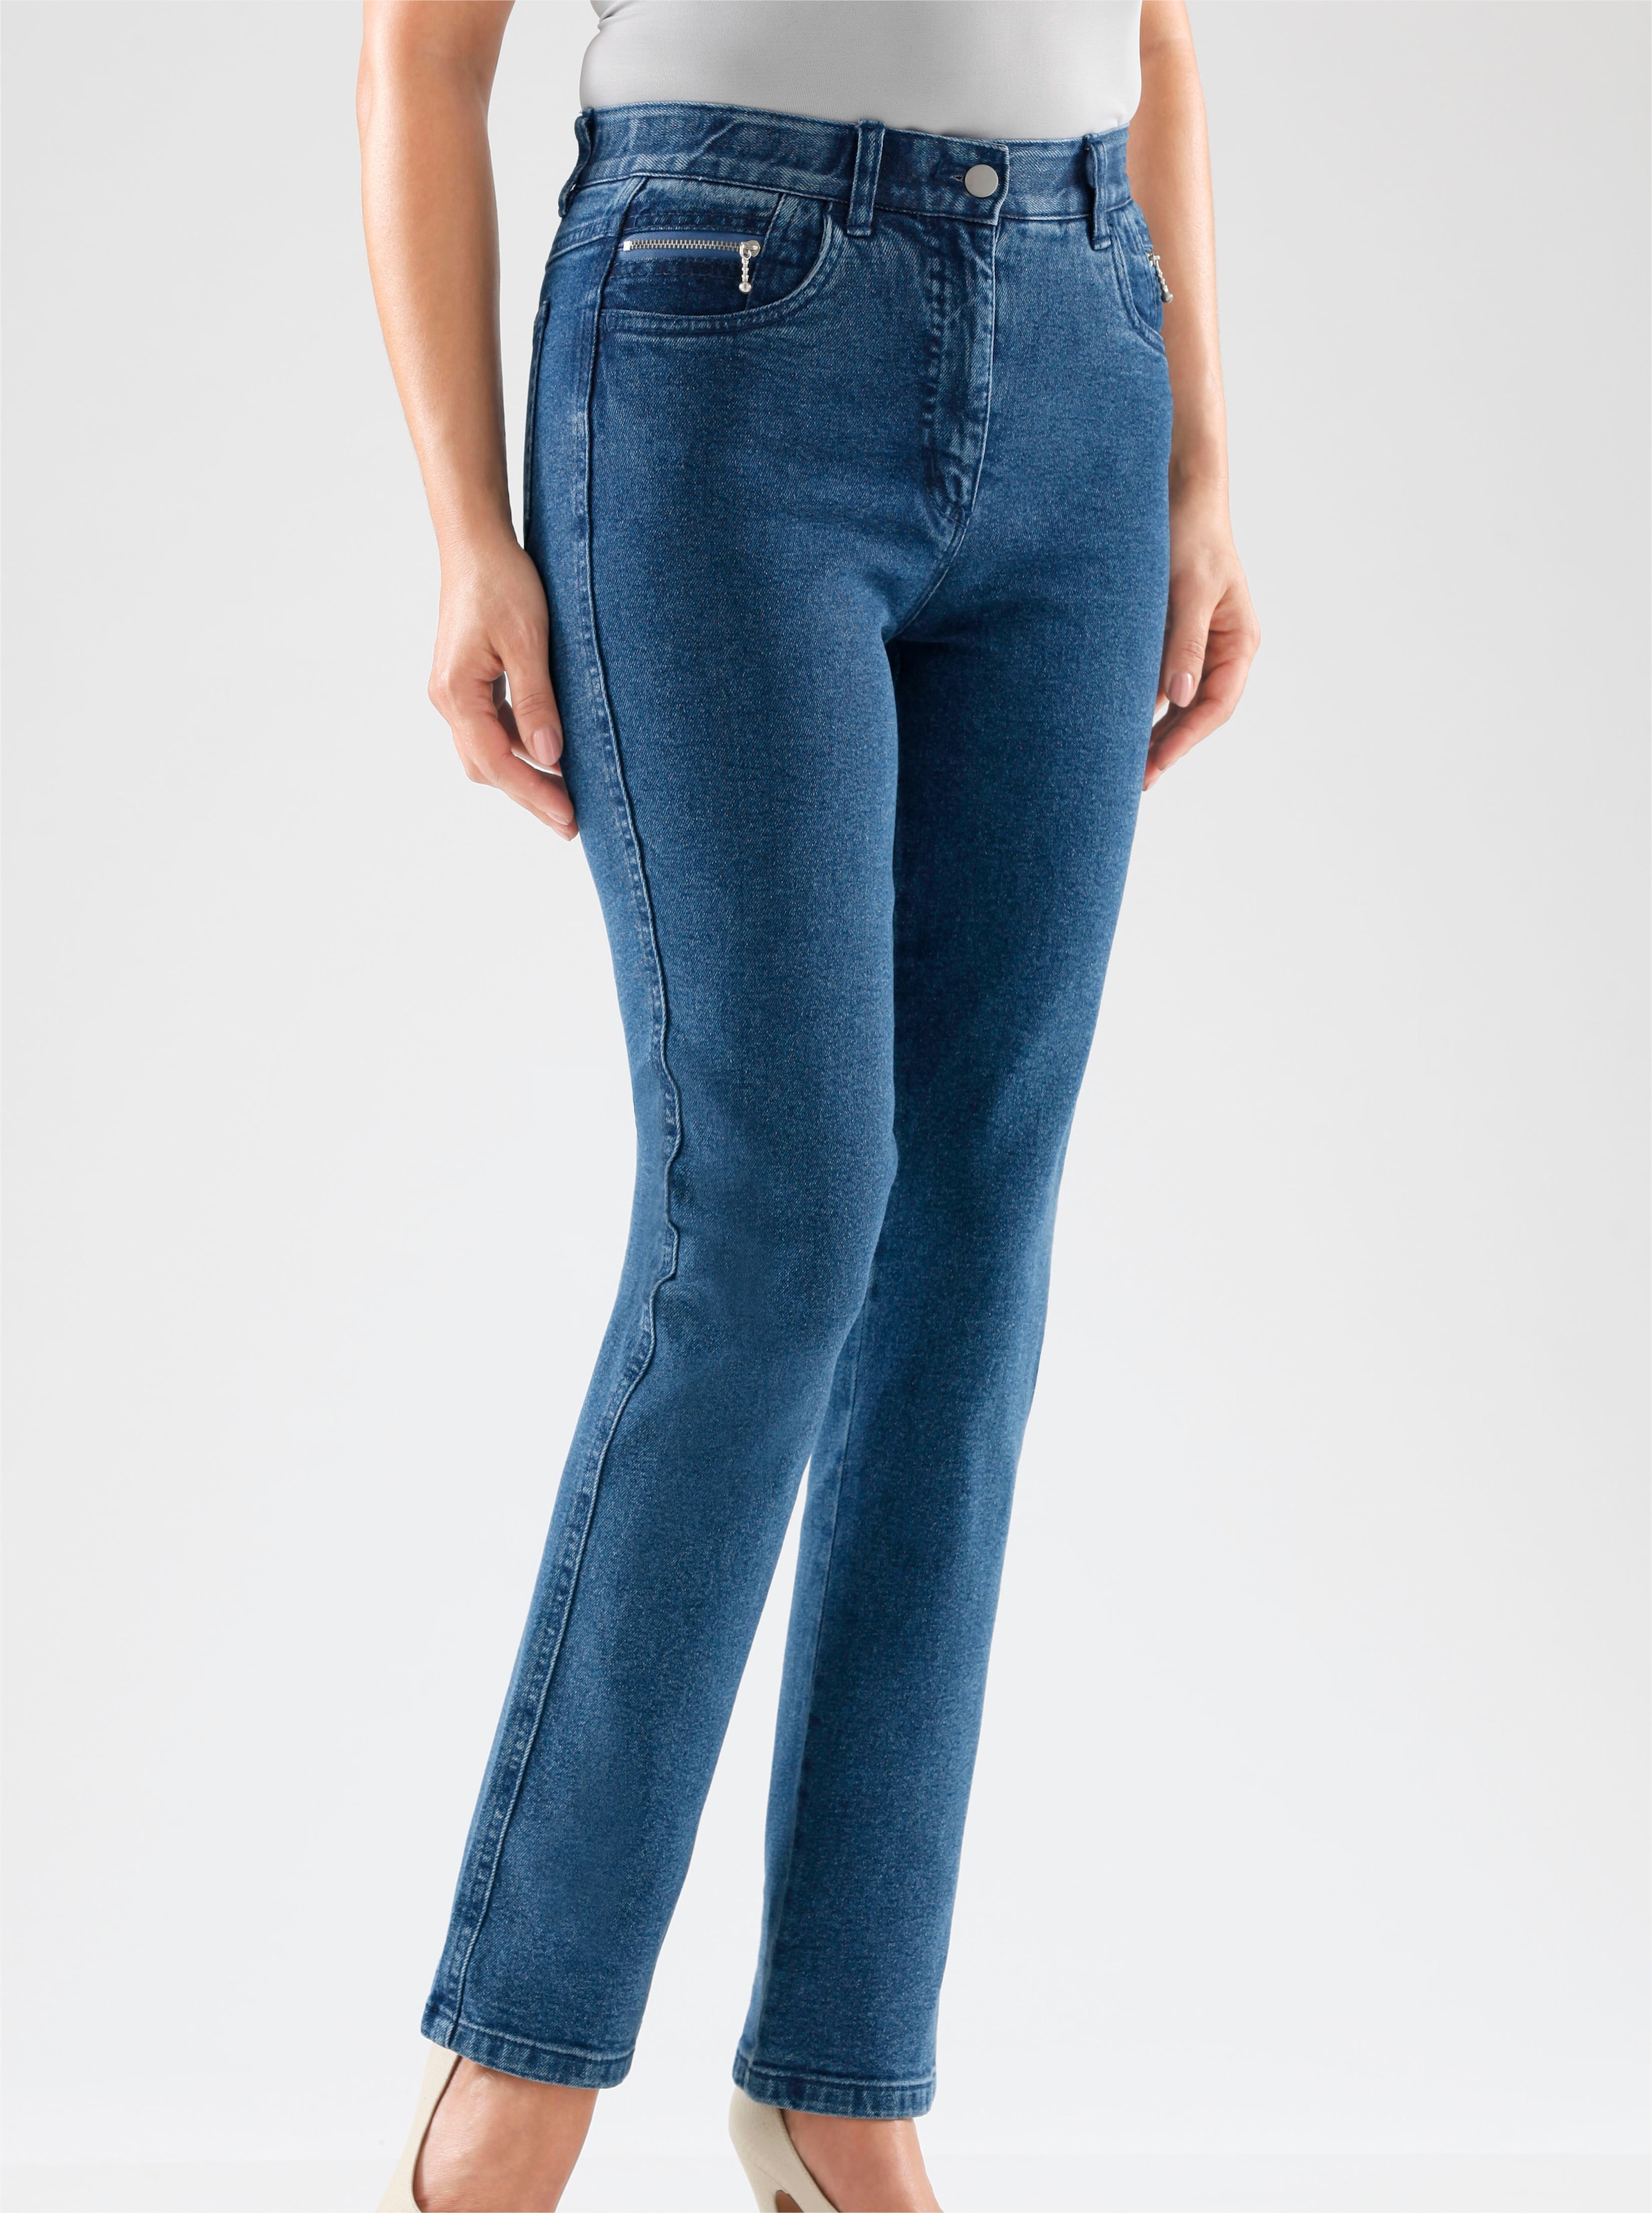 Witt Damen 5-Pocket-Jeans, blue-stone-washed